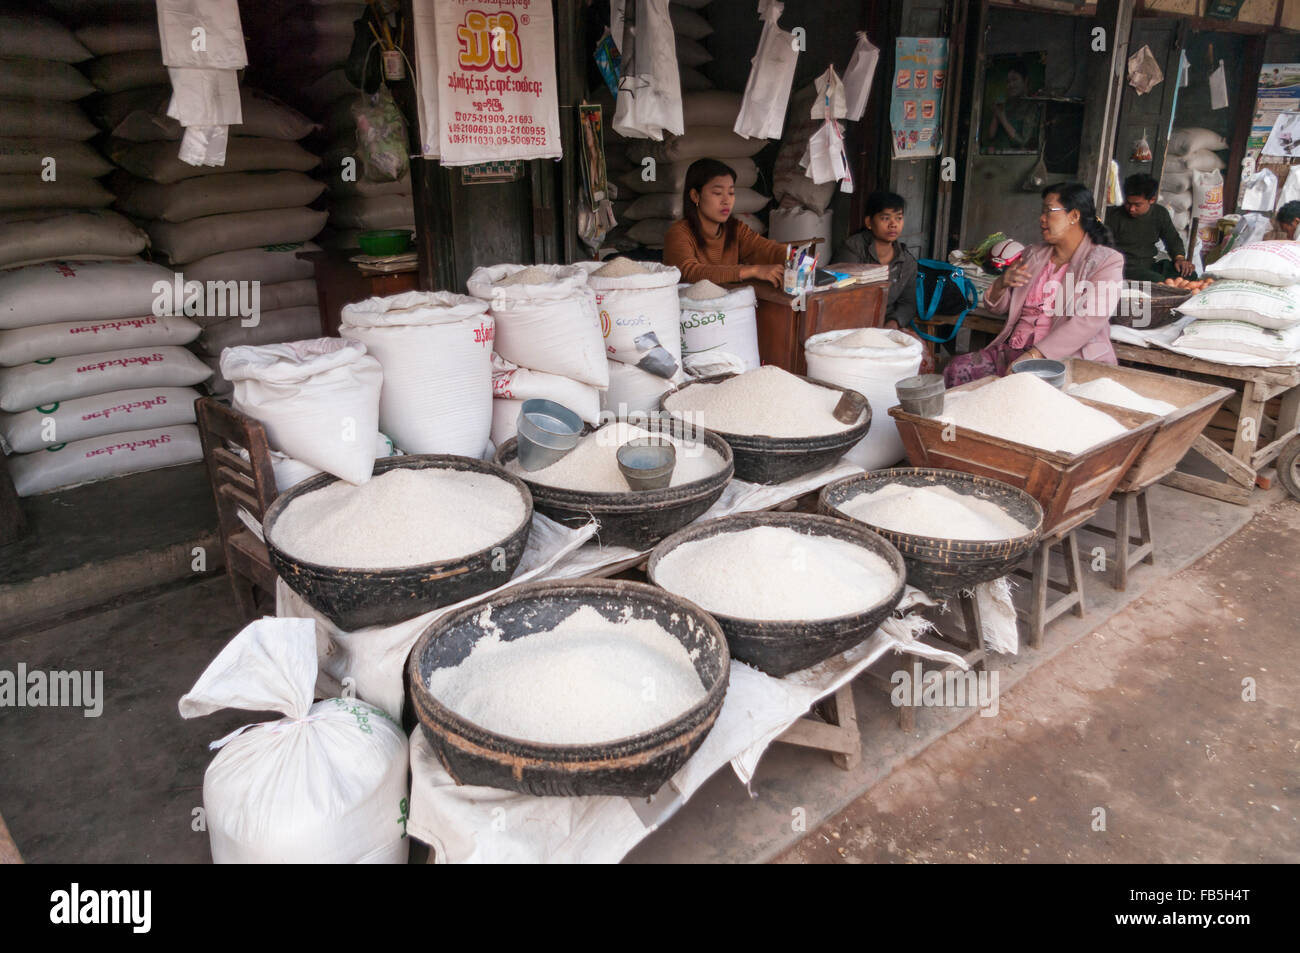 Grandi quantitativi di riso in bianco in vendita su una strada del mercato di Nyaung U, Bagan, Mandalay Regione, Myanmar. Foto Stock